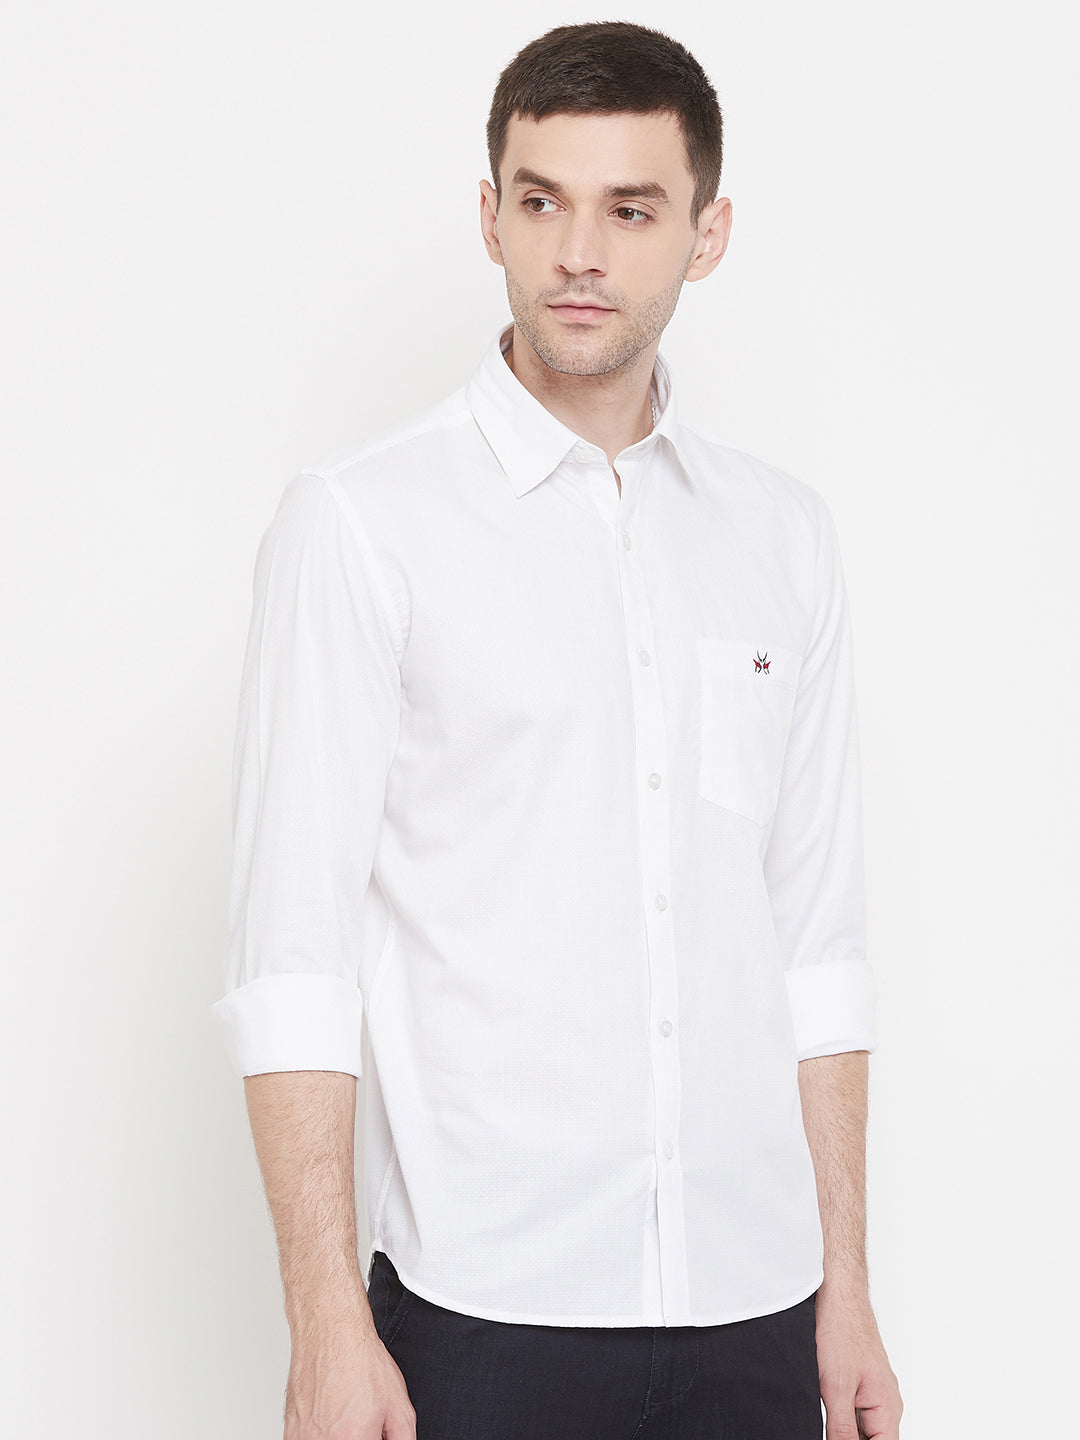 White Slim Fit shirt - Men Shirts